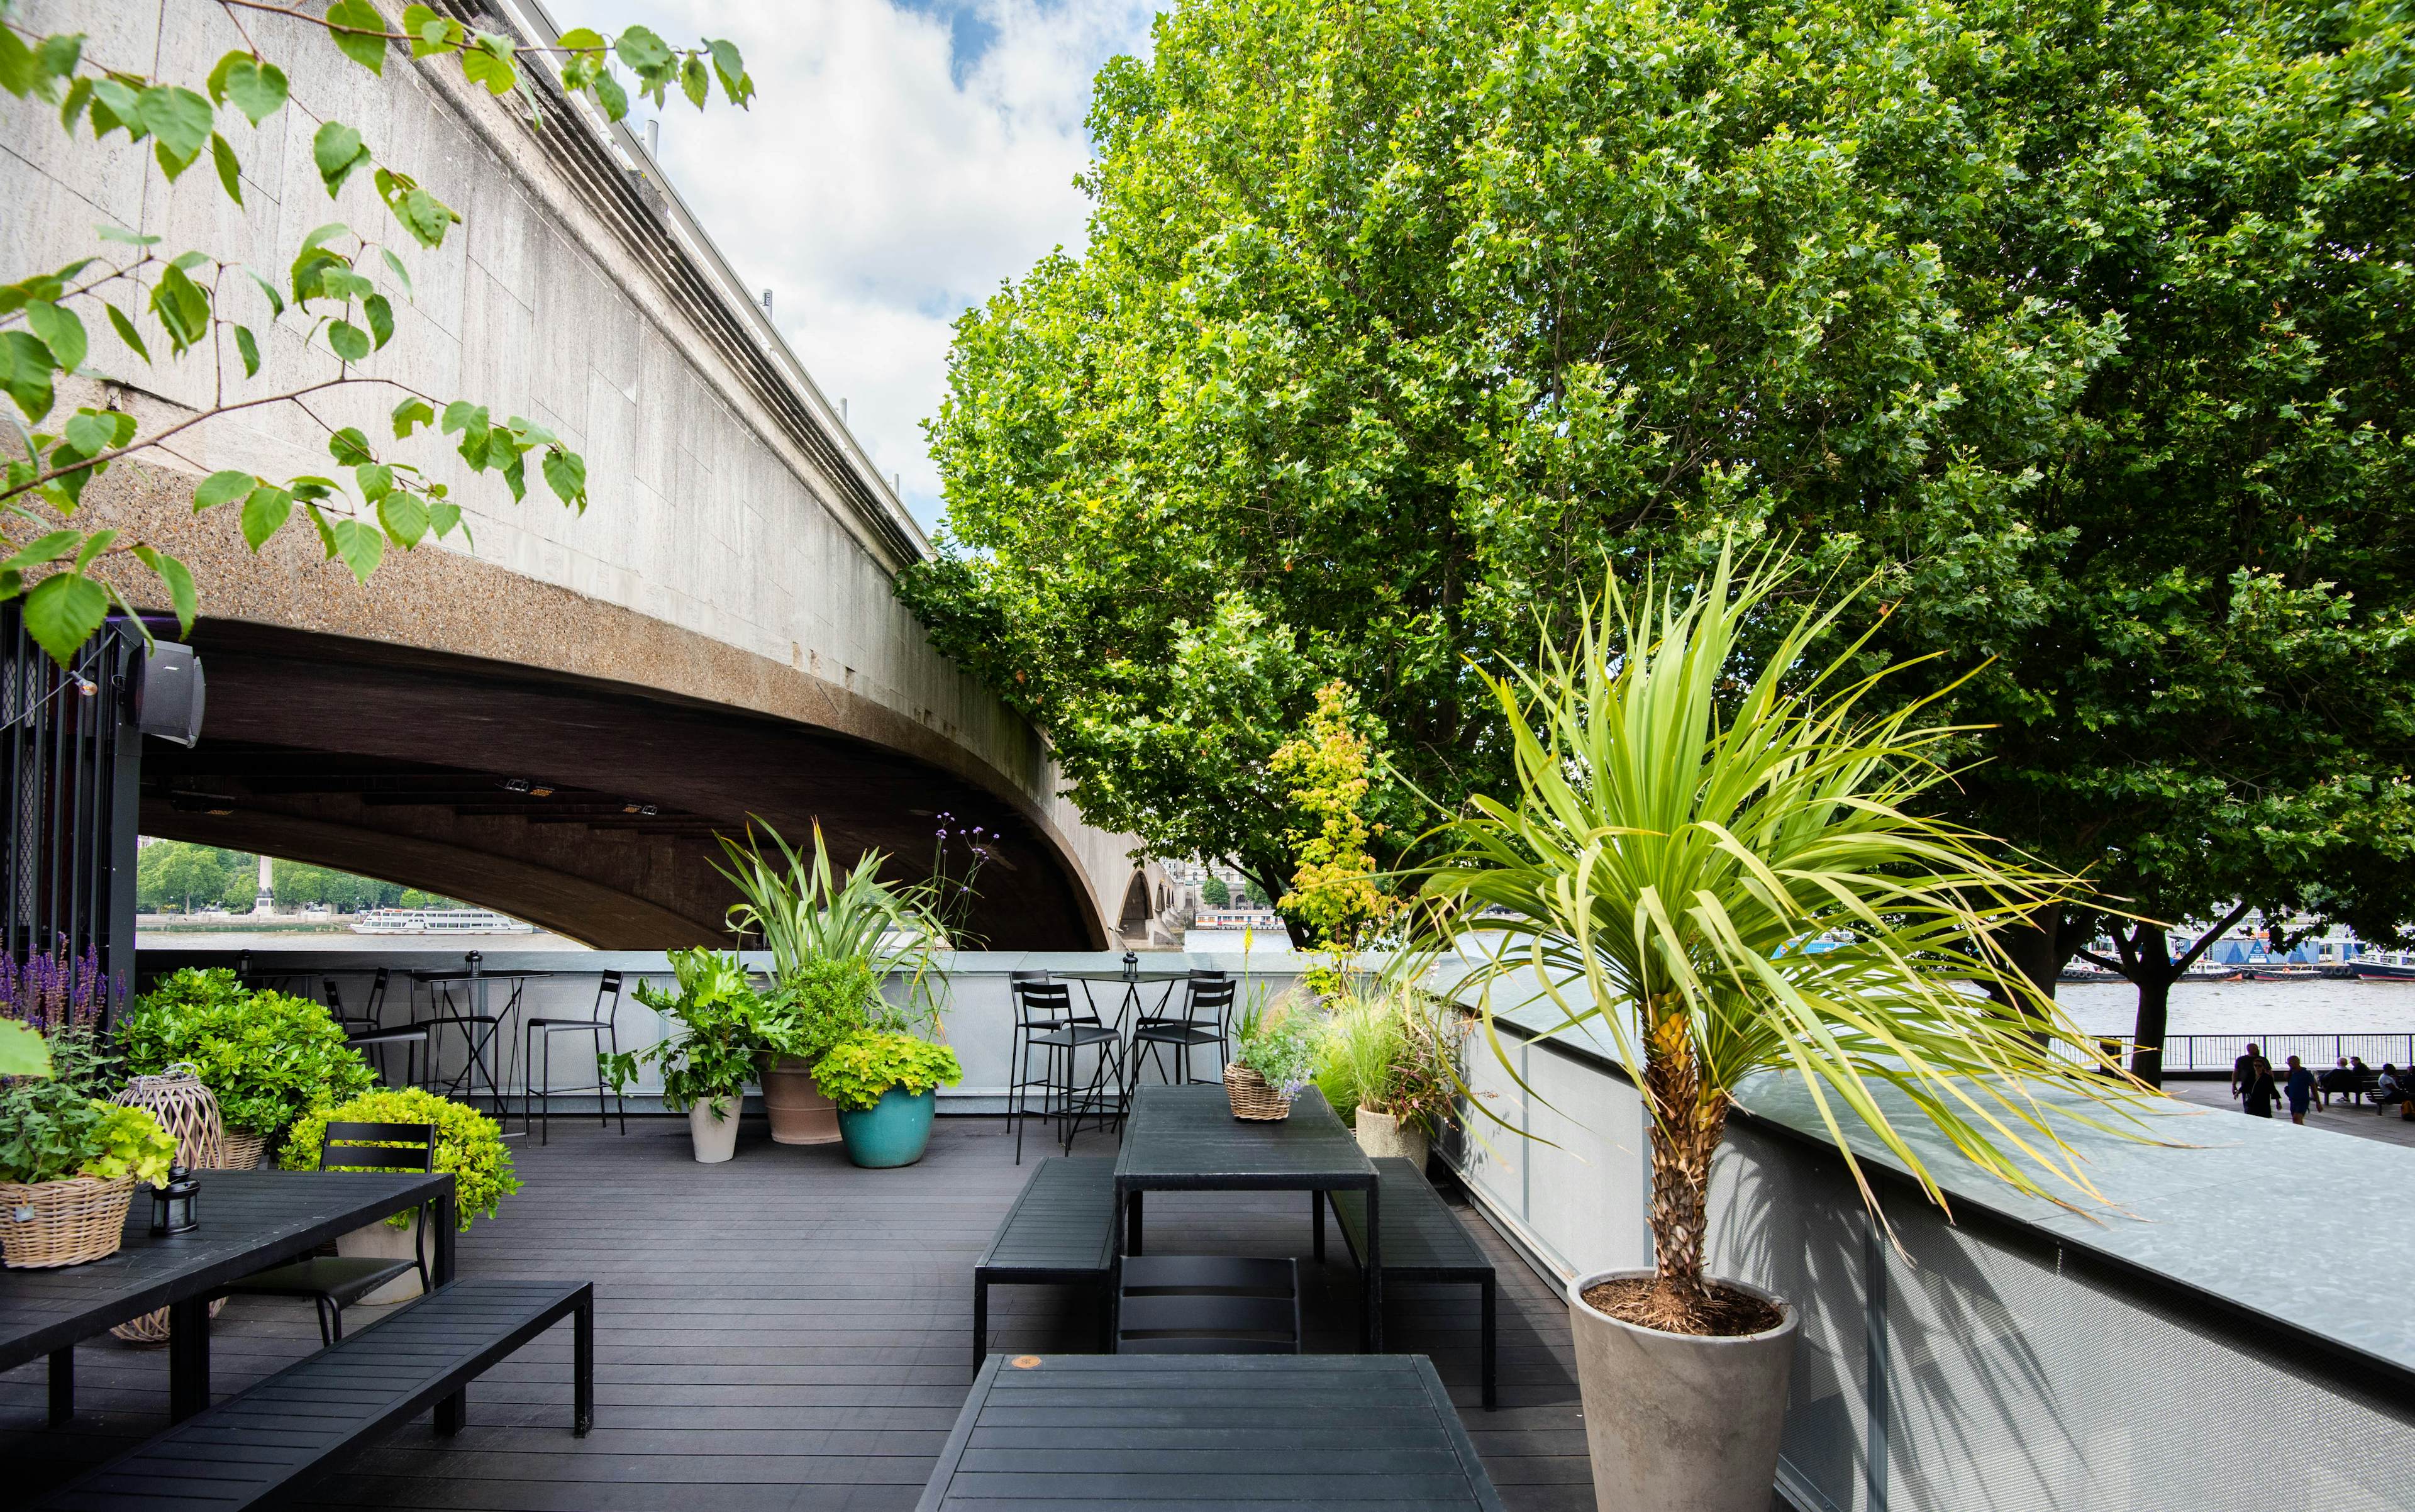 The Riverfront Terrace - Balcony Bar image 1